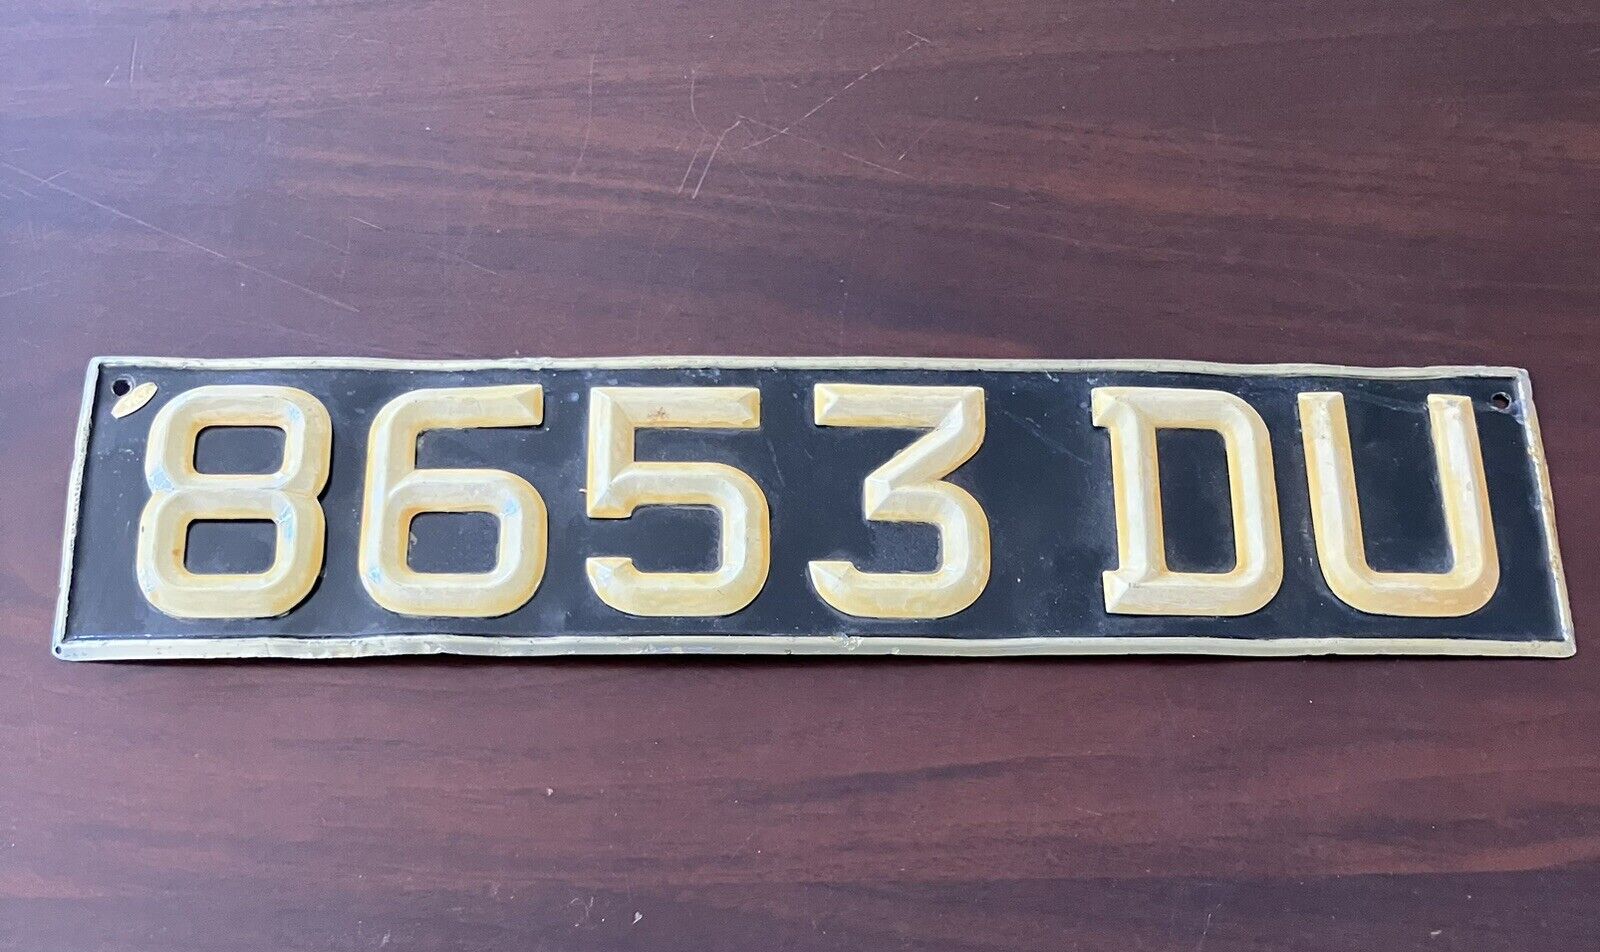 Old Vintage British license plate puffy letters Ace Brand 8653 DU UK England